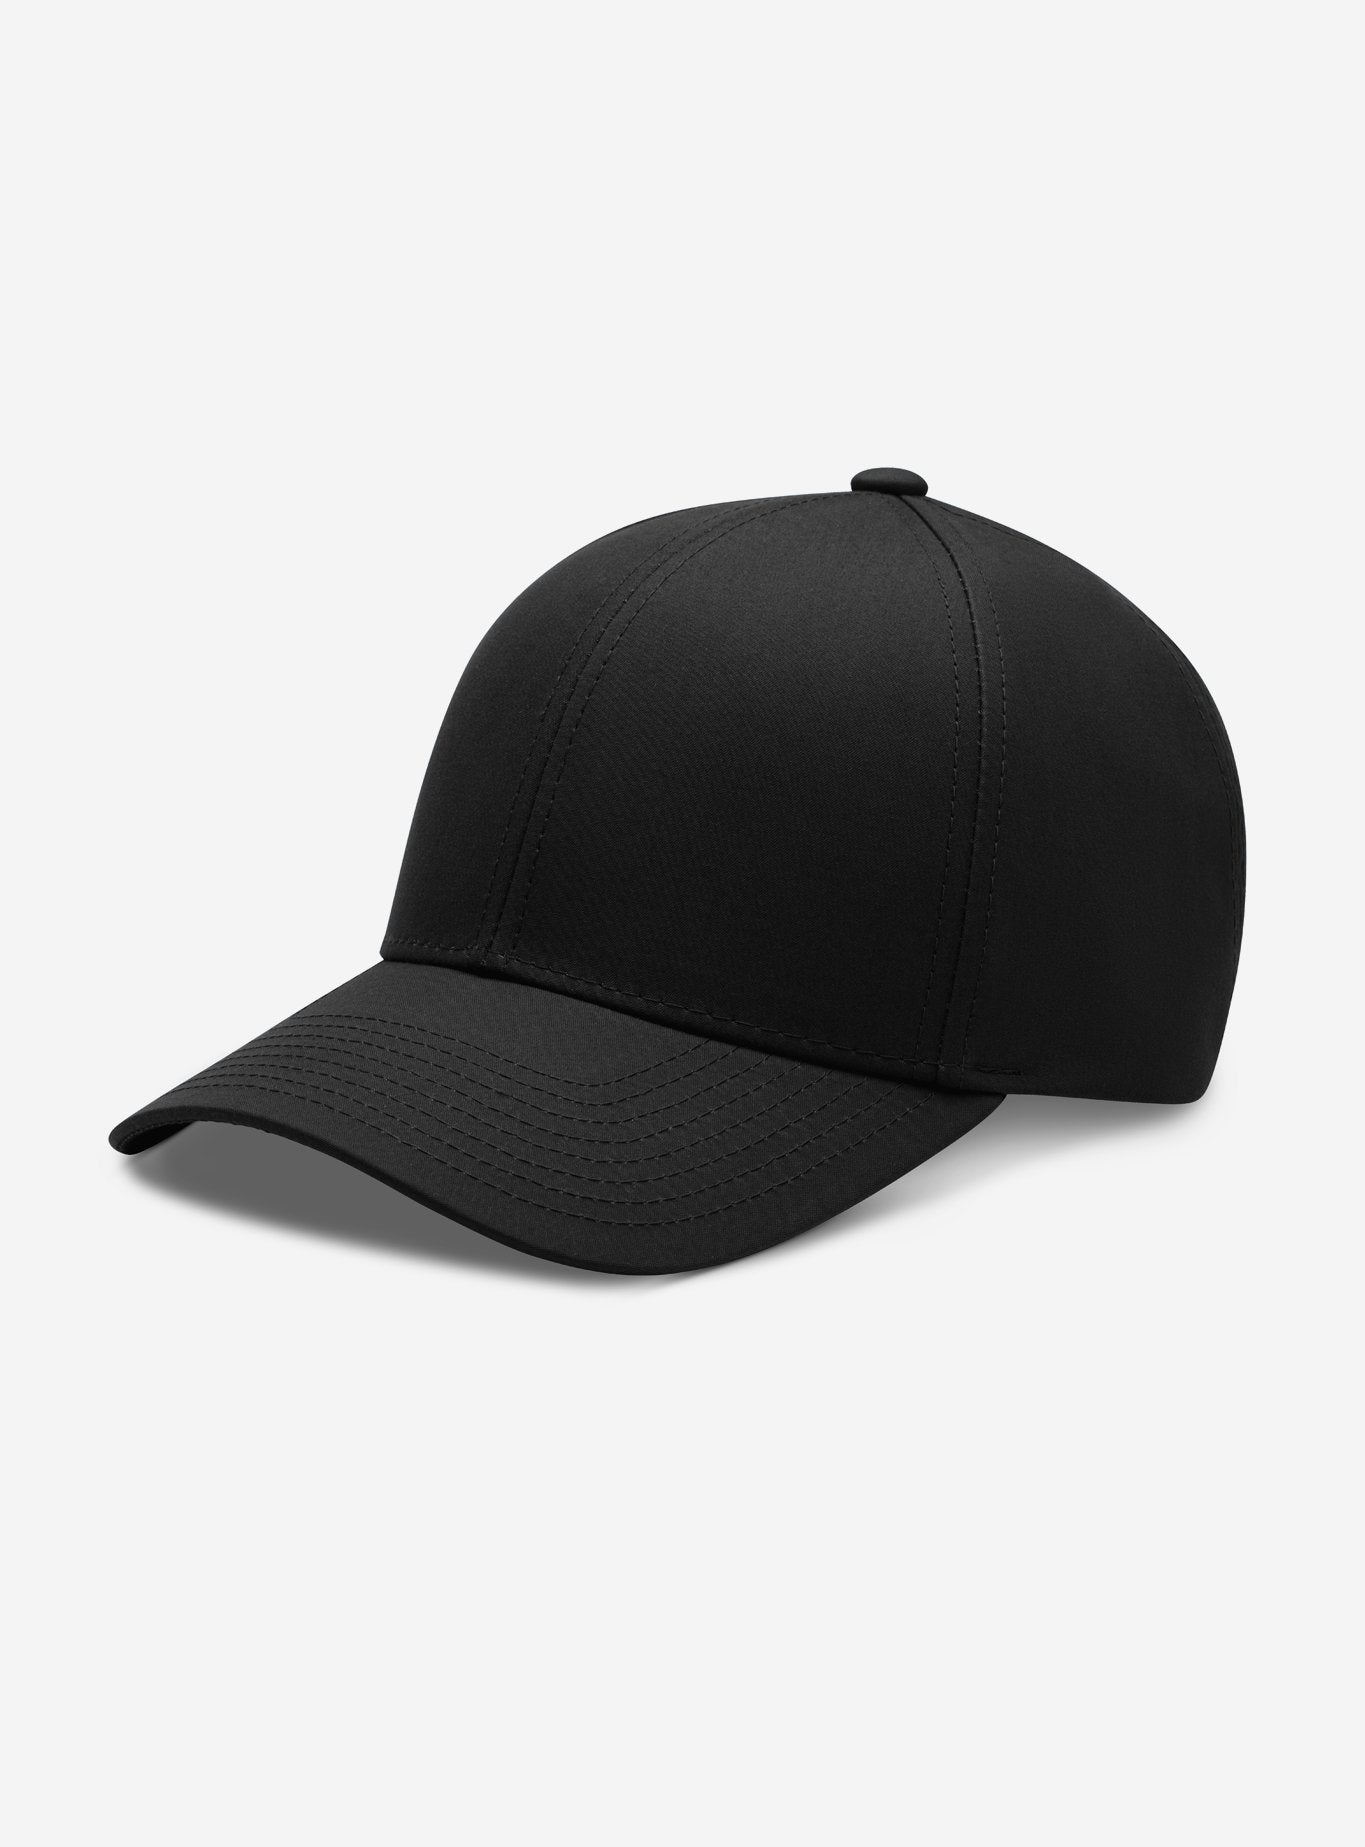 Stiksen 107 Ventile Cap - 100% Organic Cotton Black Headwear